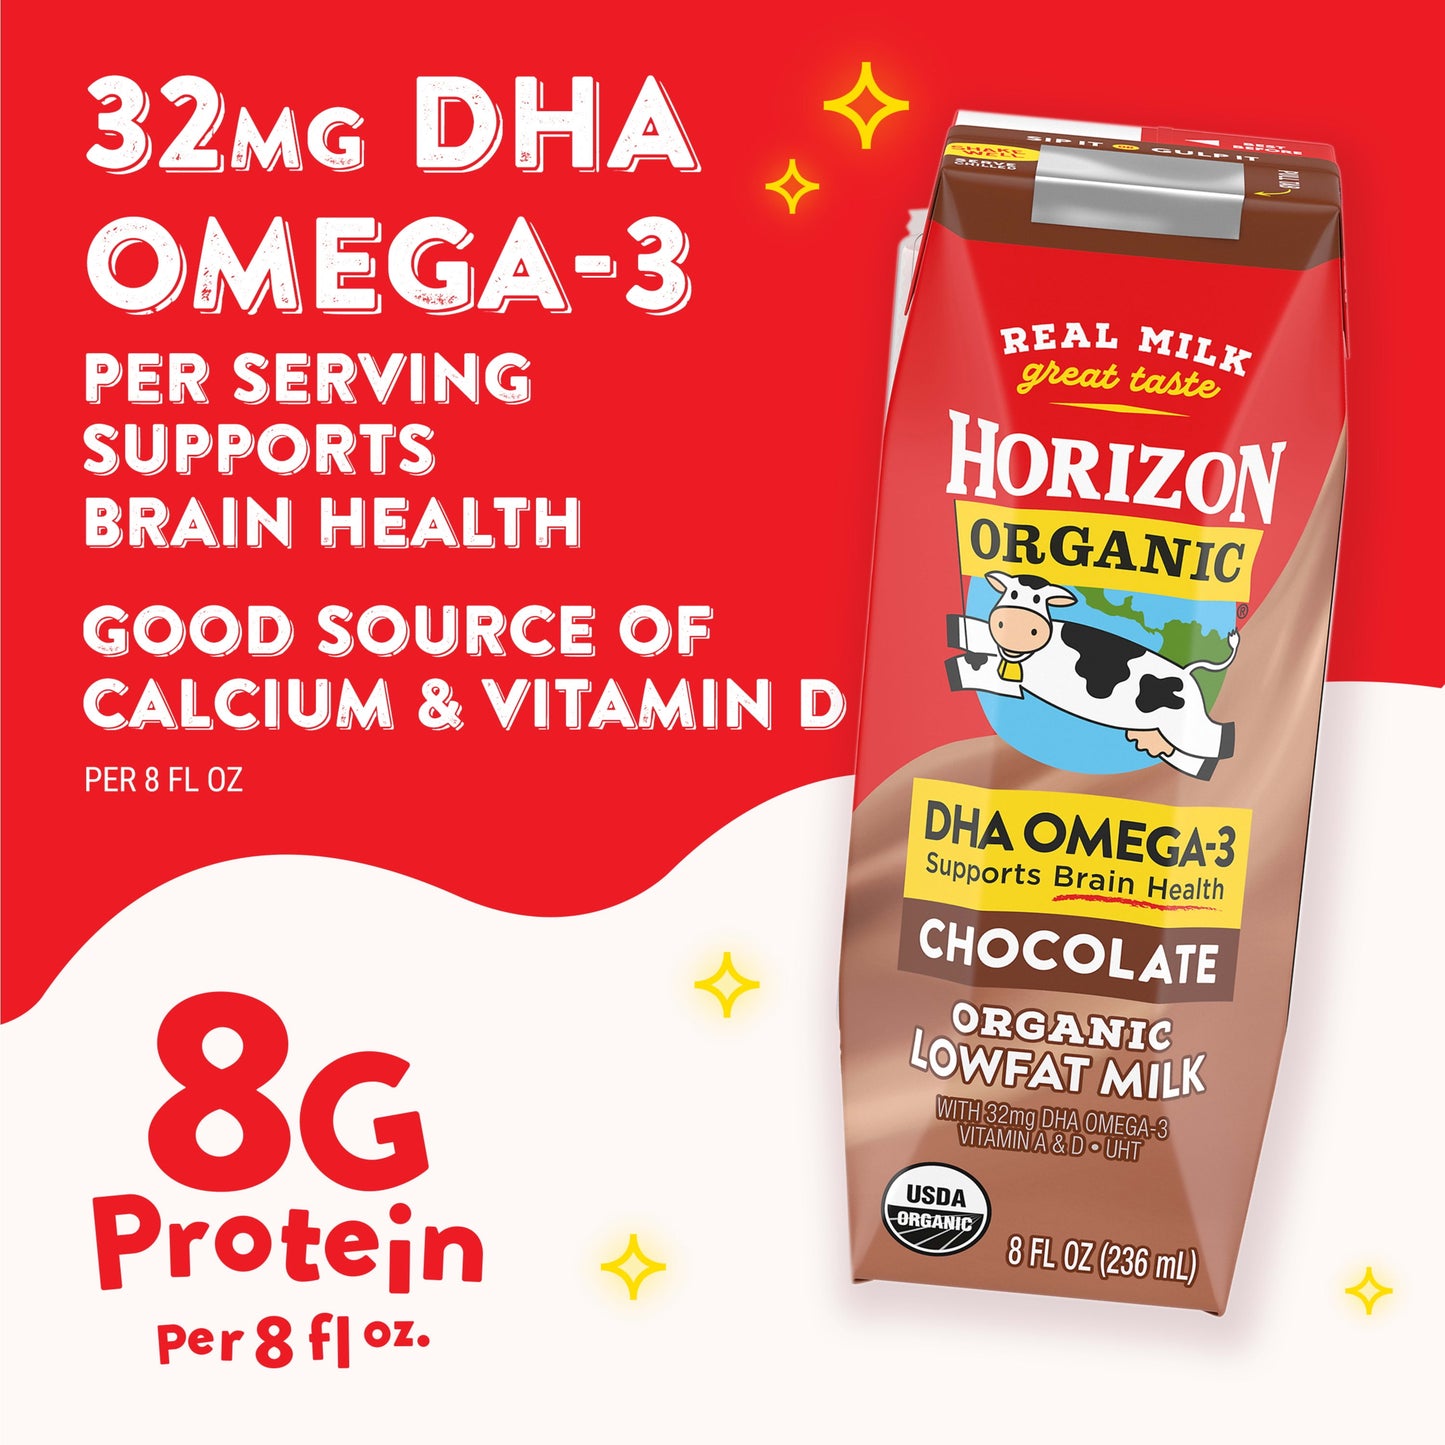 Horizon Organic 1% Lowfat UHT DHA Omega-3 Chocolate Milk, 8 Oz., 6 Count